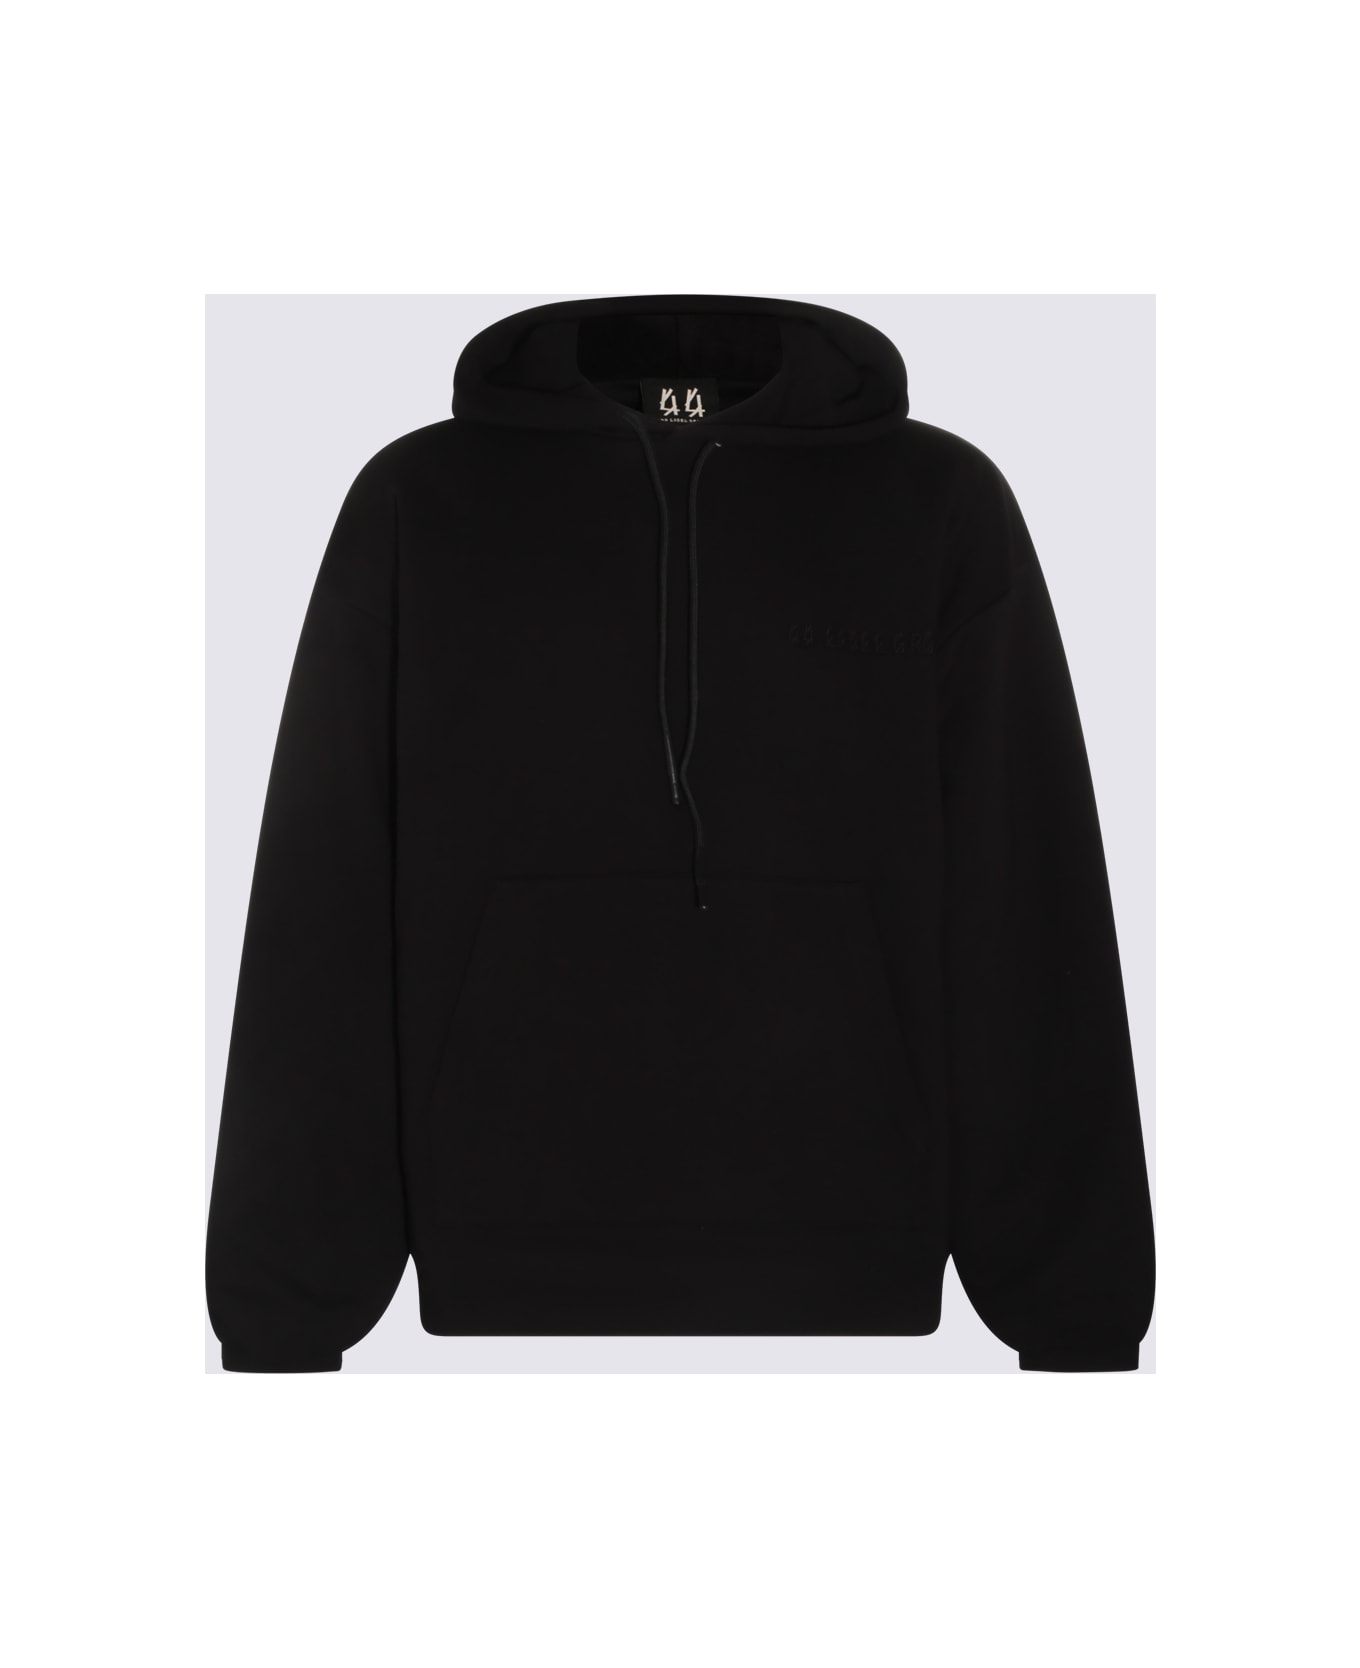 44 Label Group Black Cotton Sweatshirt - Black